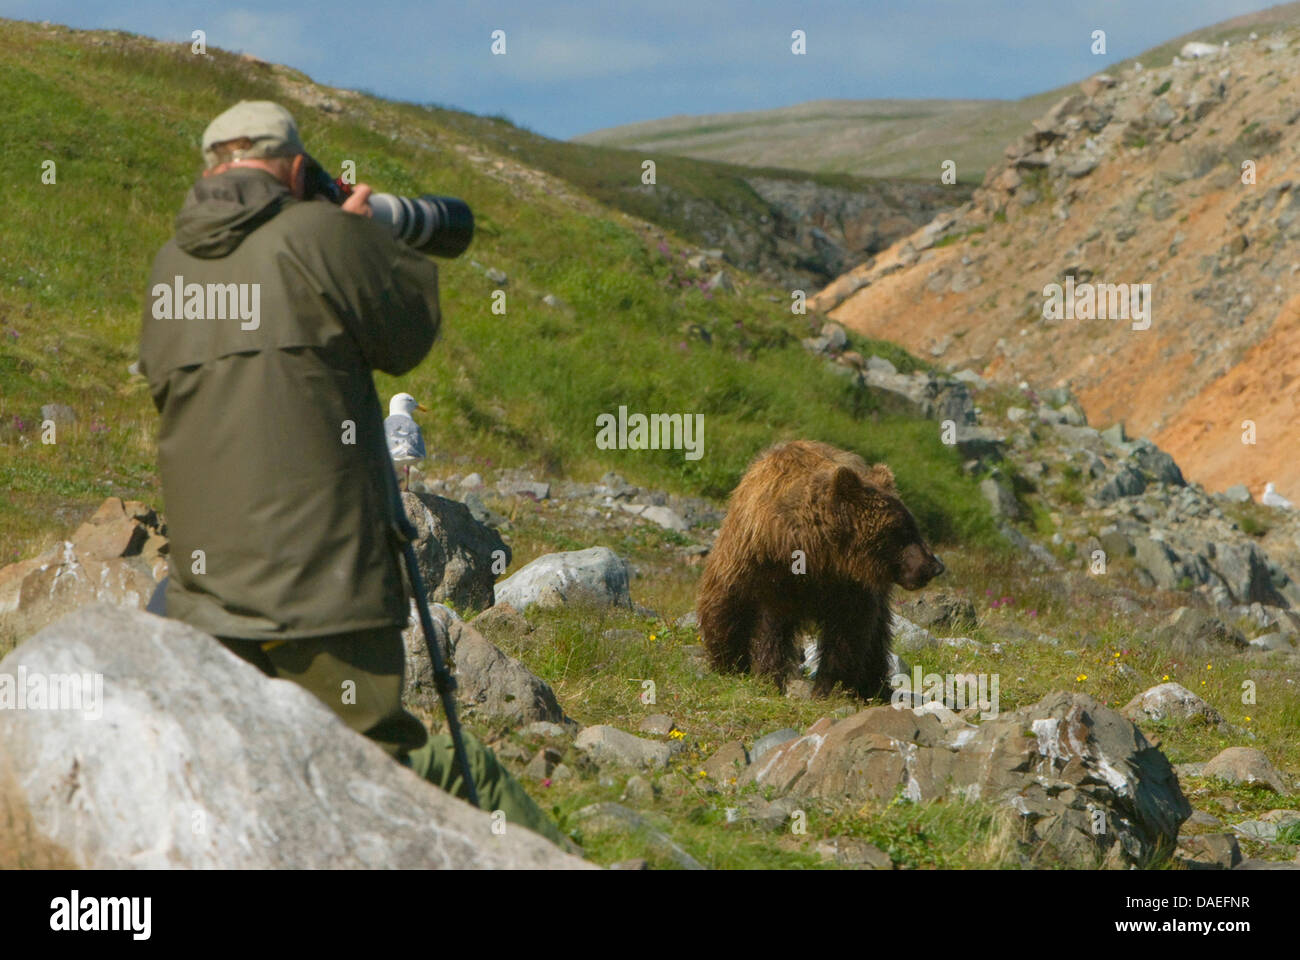 brown bear, grizzly bear, grizzly (Ursus arctos horribilis), Grizzly and photographer, USA, Alaska Stock Photo